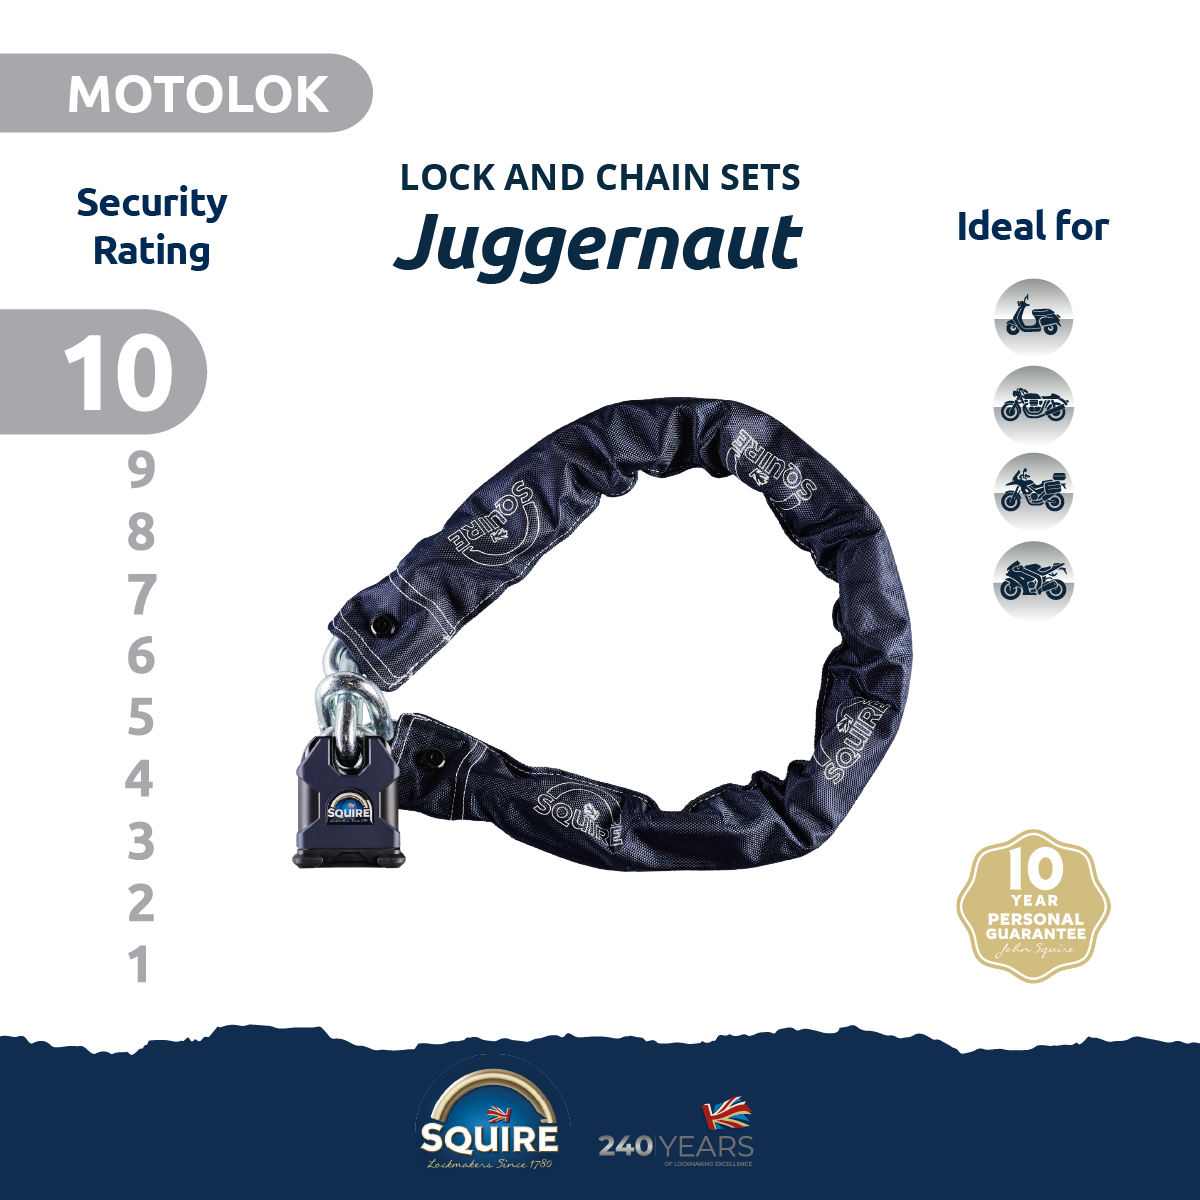 Juggernaut Padlock and Chain Set